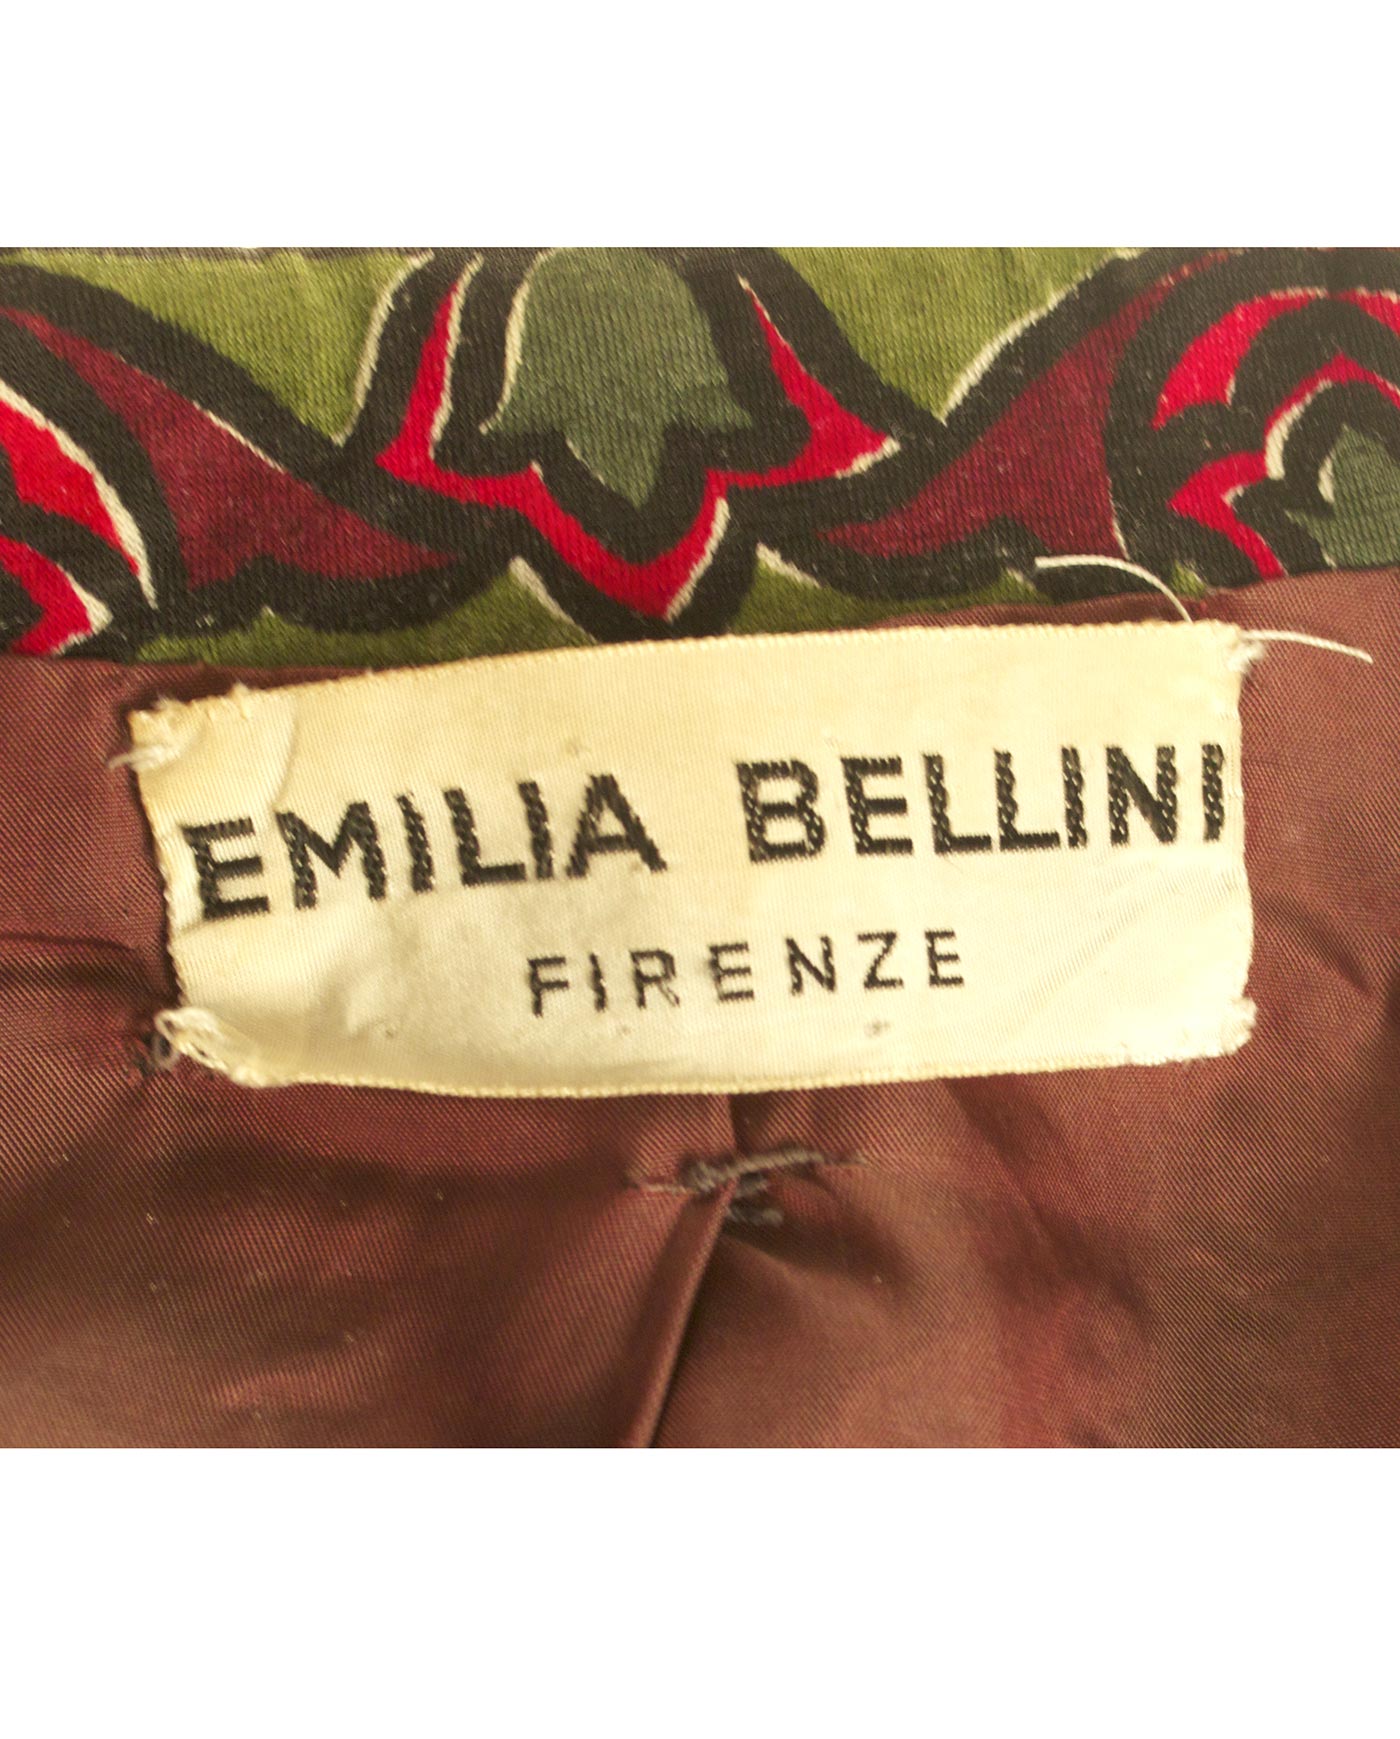 EMILIA BELLINI wool jacket 50s